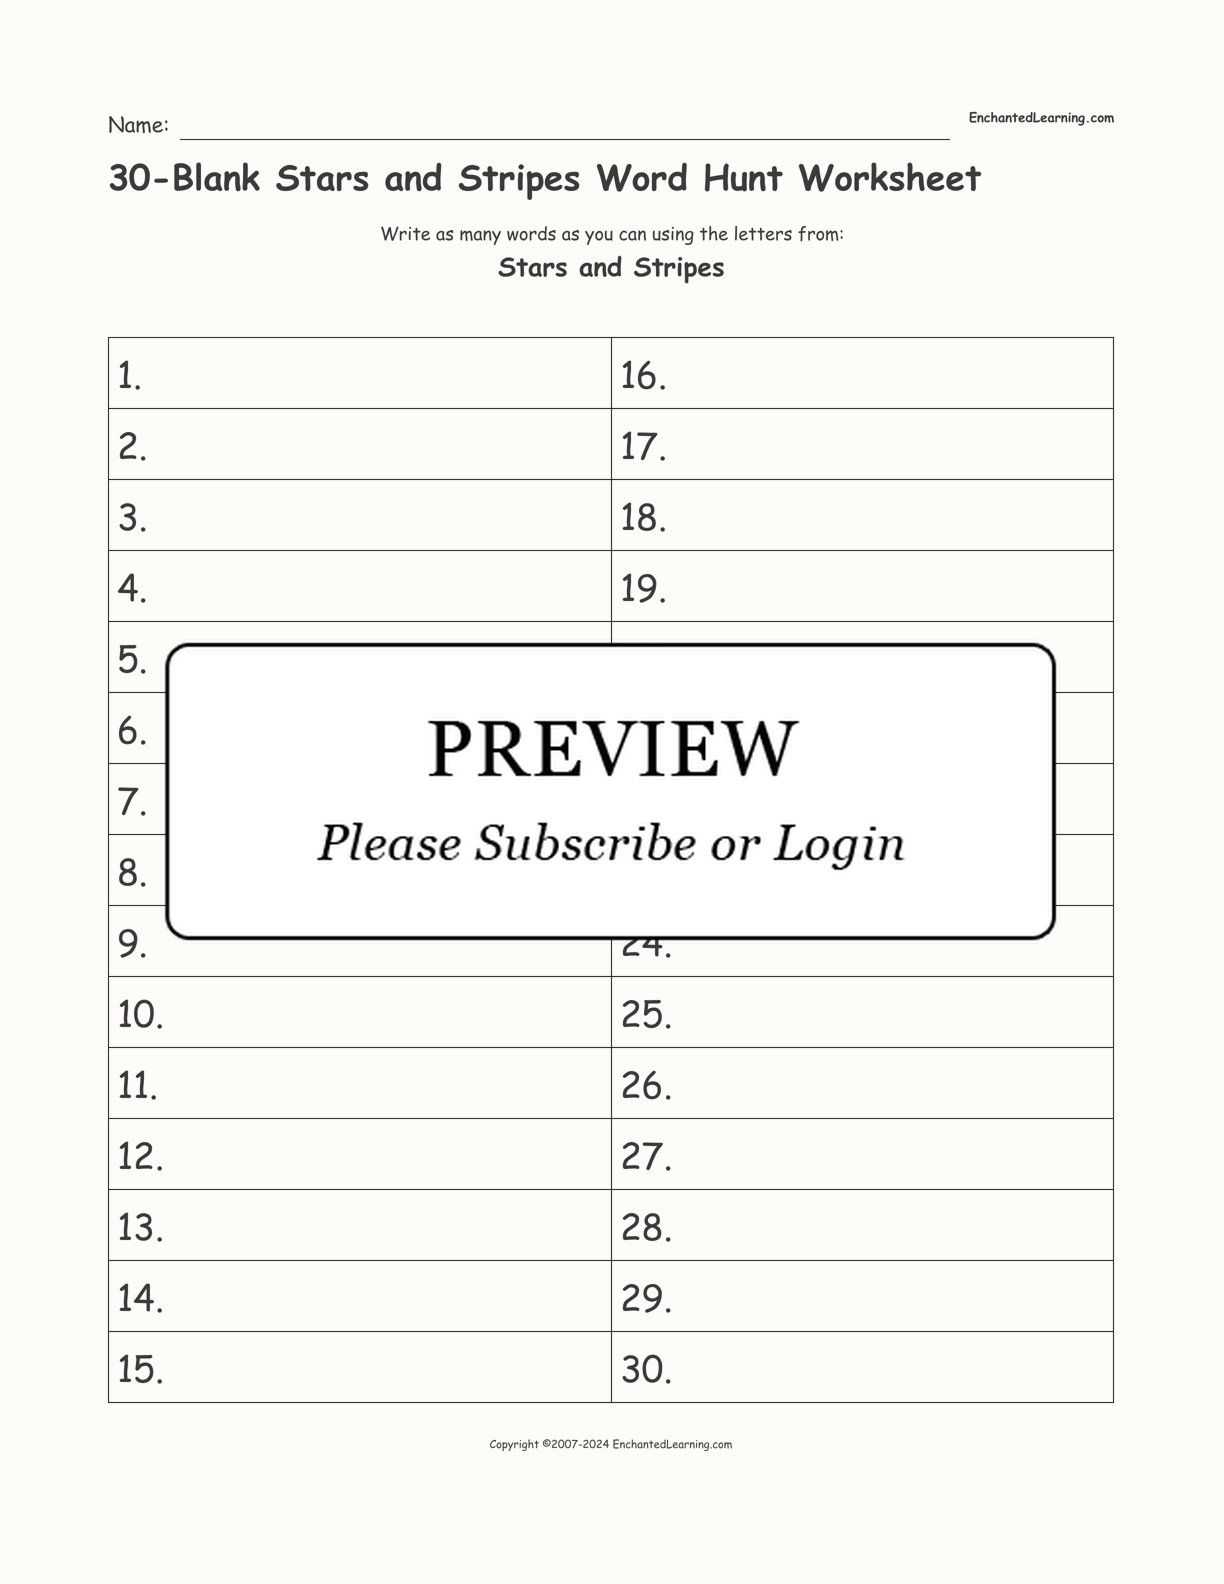 30-Blank Stars and Stripes Word Hunt Worksheet interactive worksheet page 1